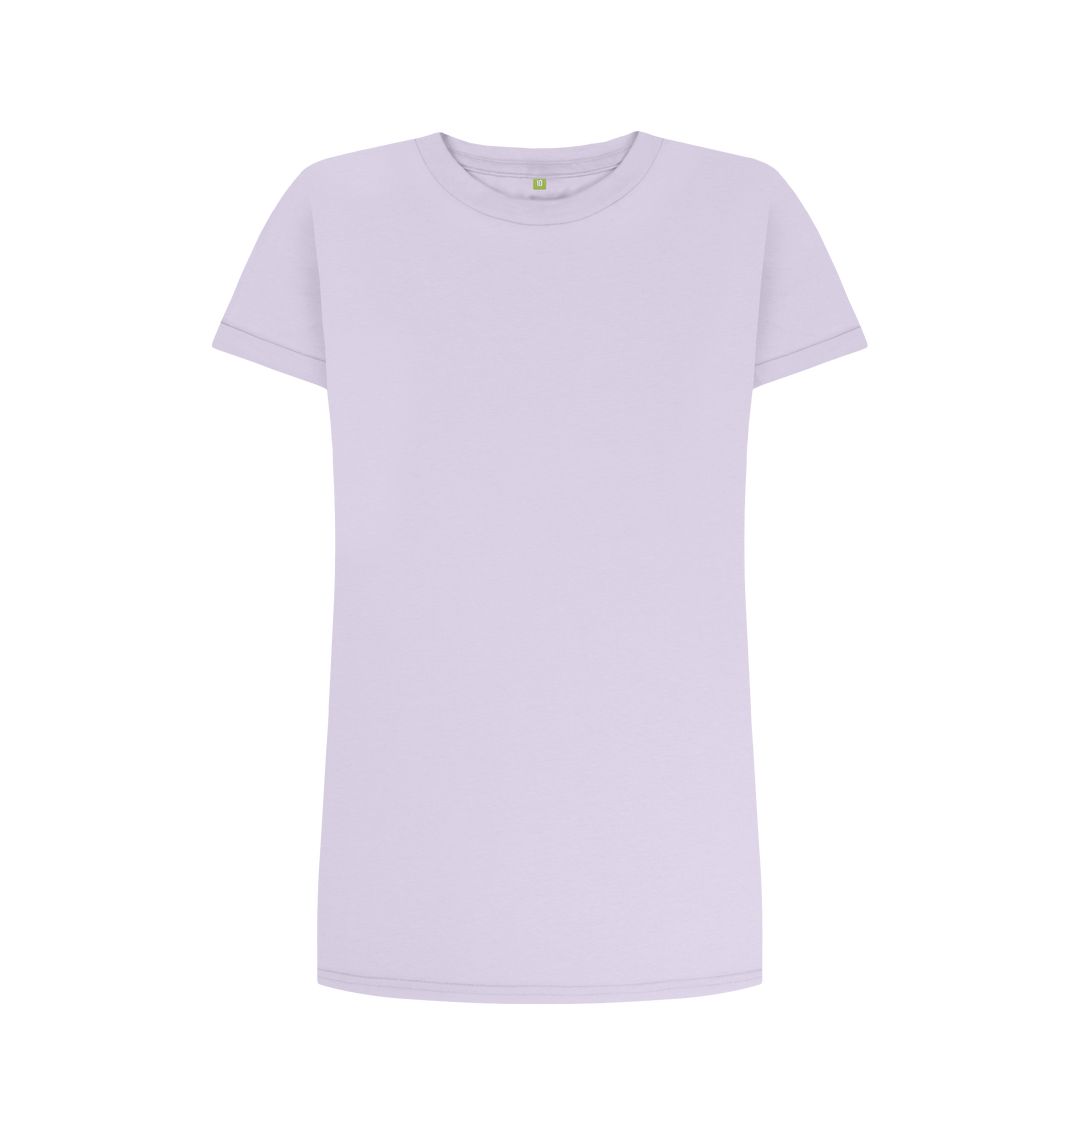 Violet Women's organic cotton t-shirt dress